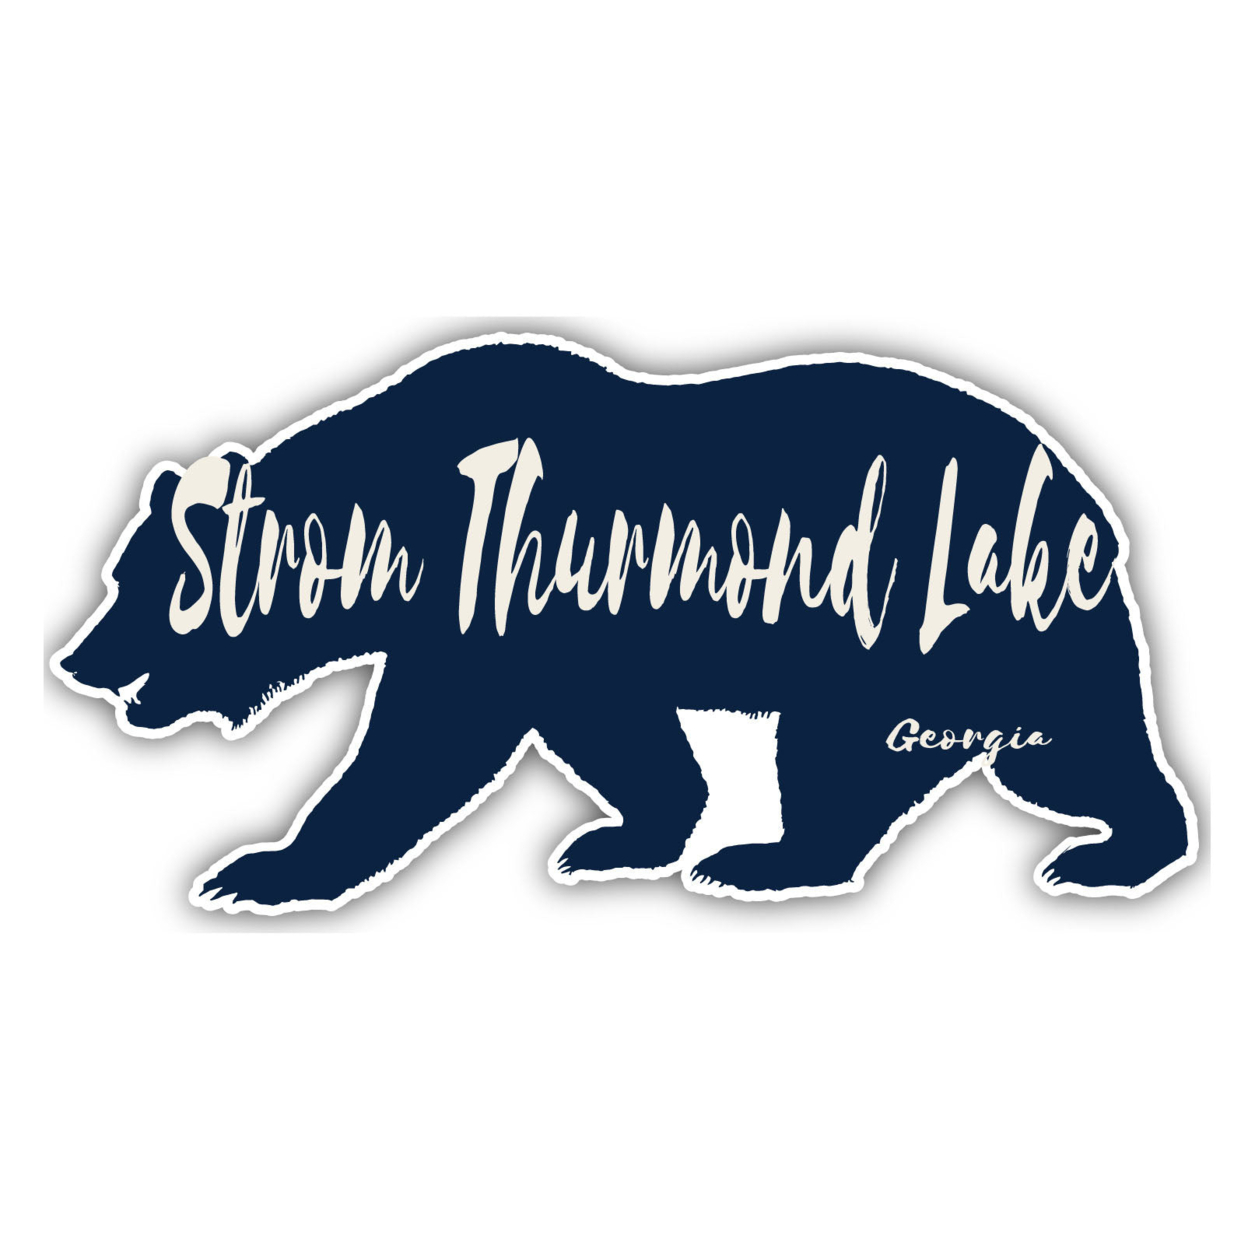 Strom Thurmond Lake Georgia Souvenir Decorative Stickers (Choose Theme And Size) - Single Unit, 2-Inch, Bear